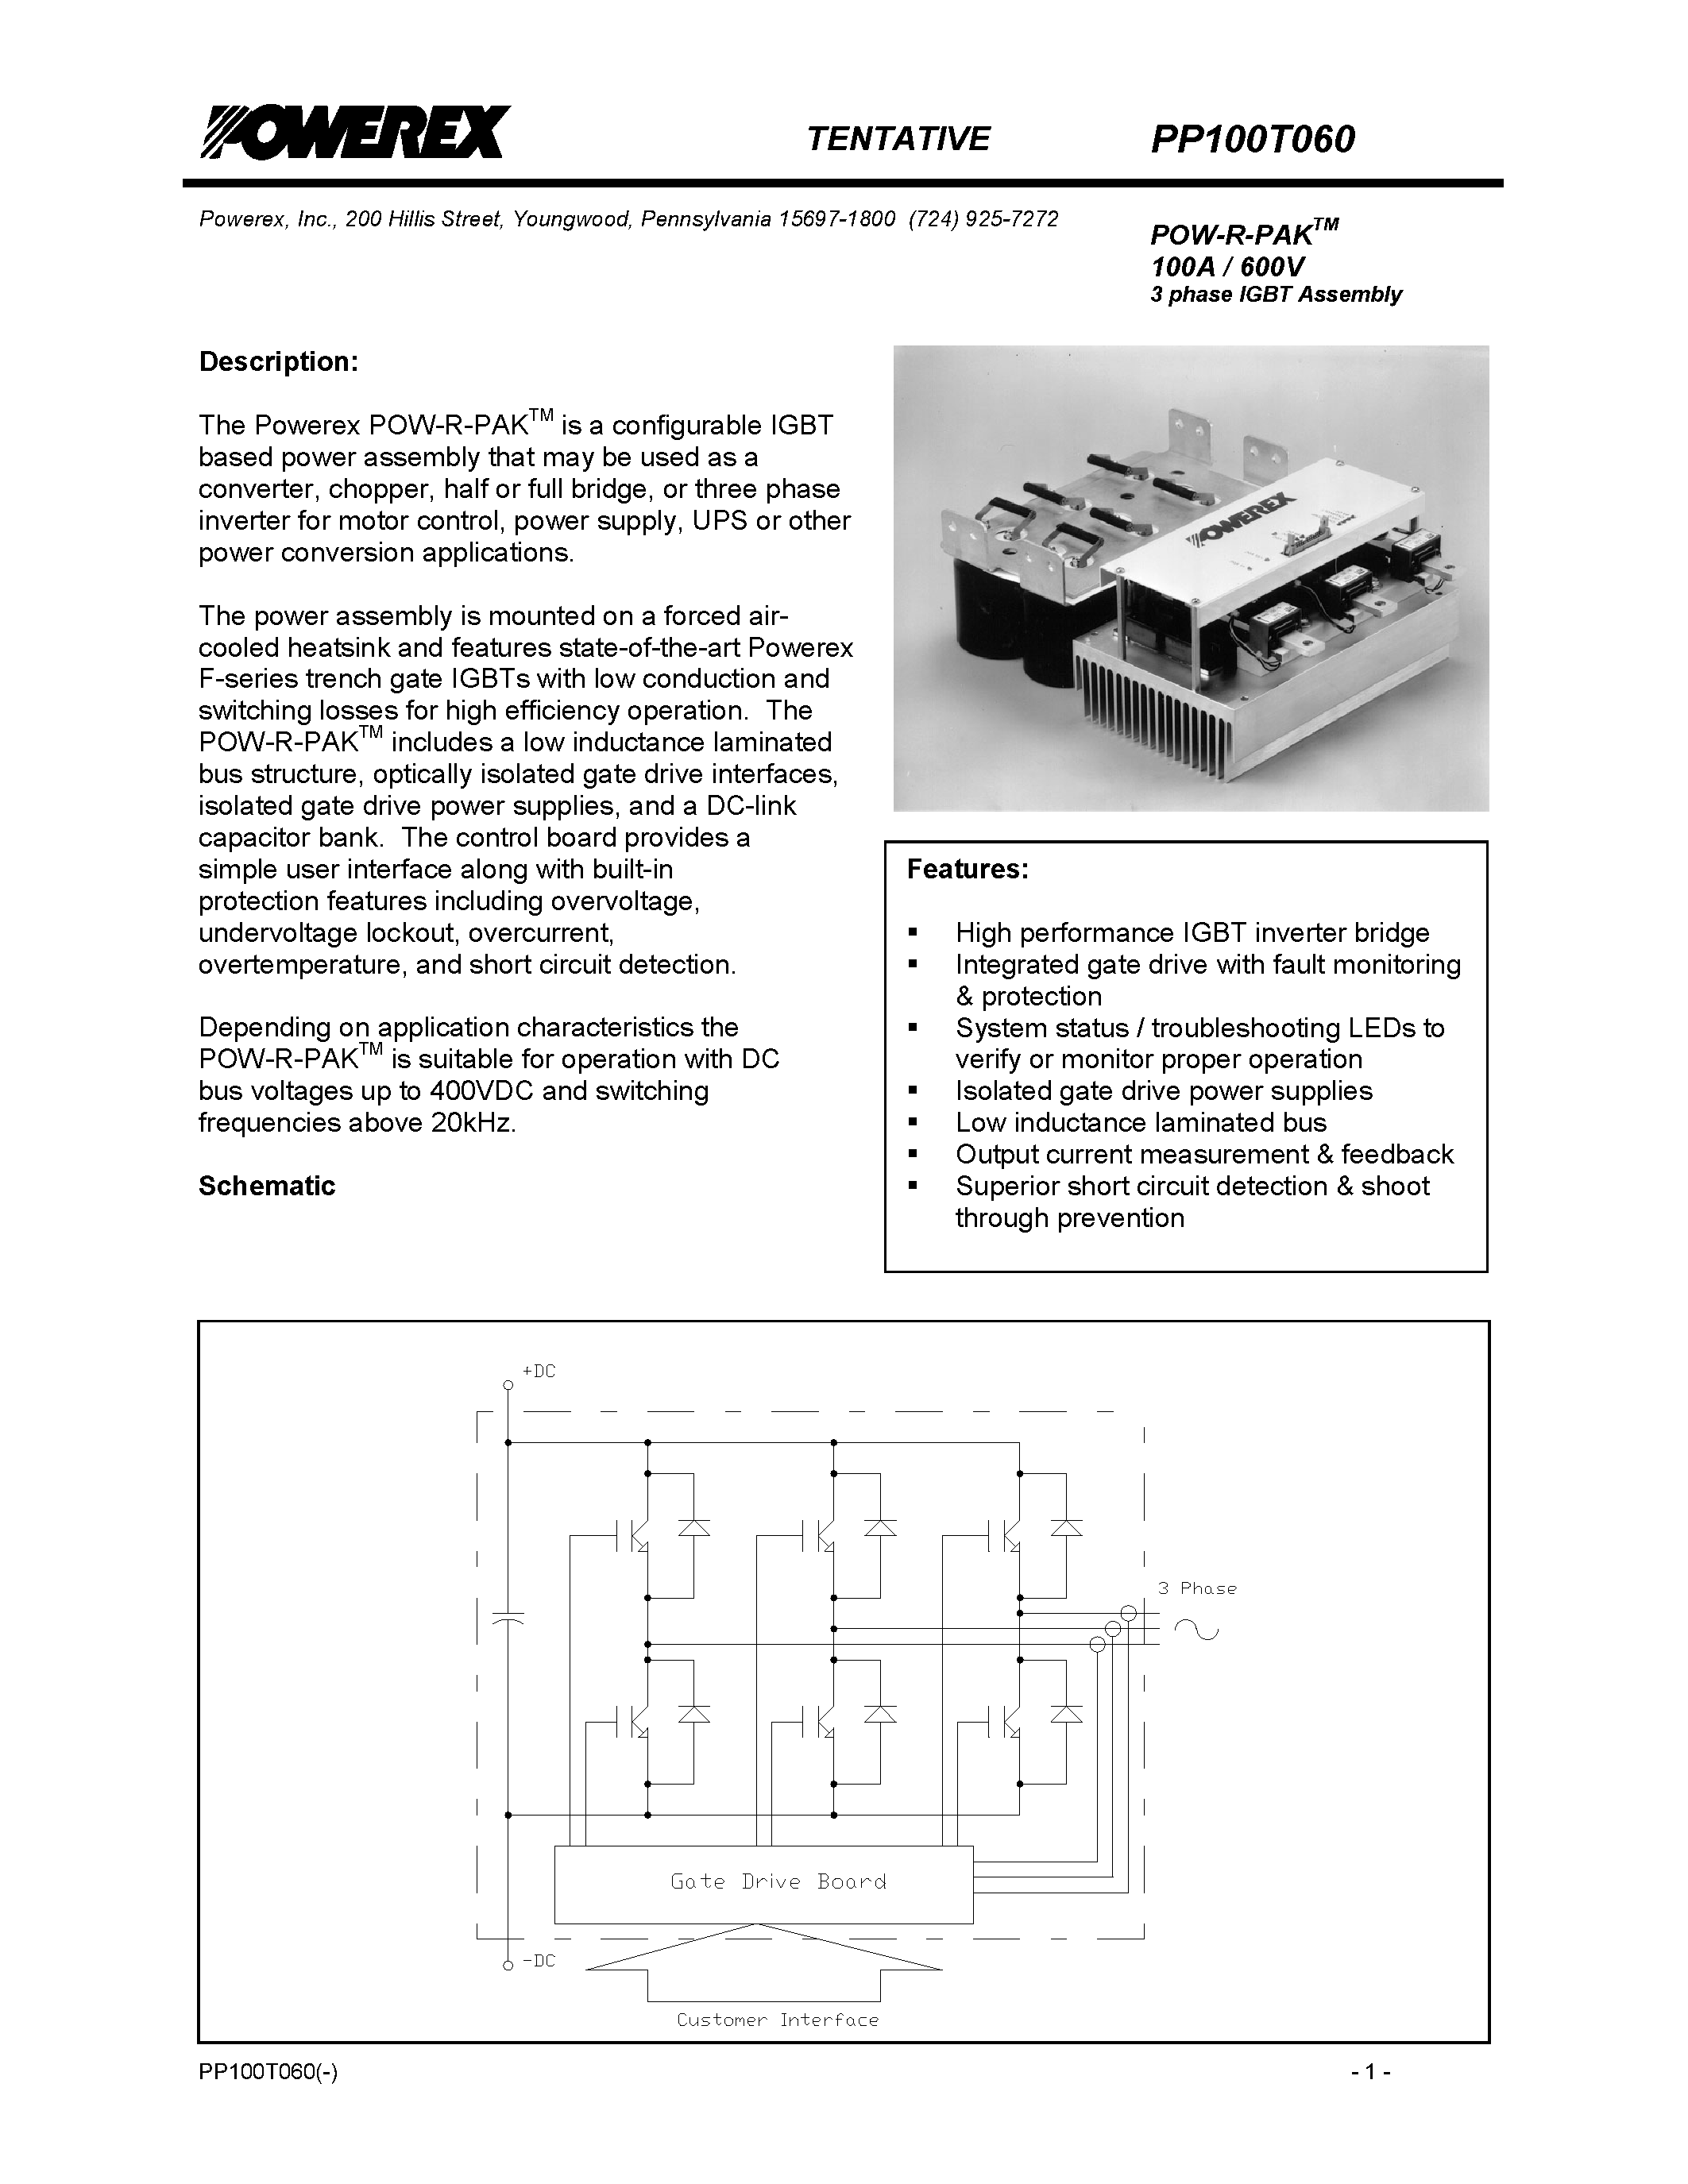 Даташит PP100T060 - POW-R-PAK 100A / 600V 3 phase IGBT Assembly страница 1